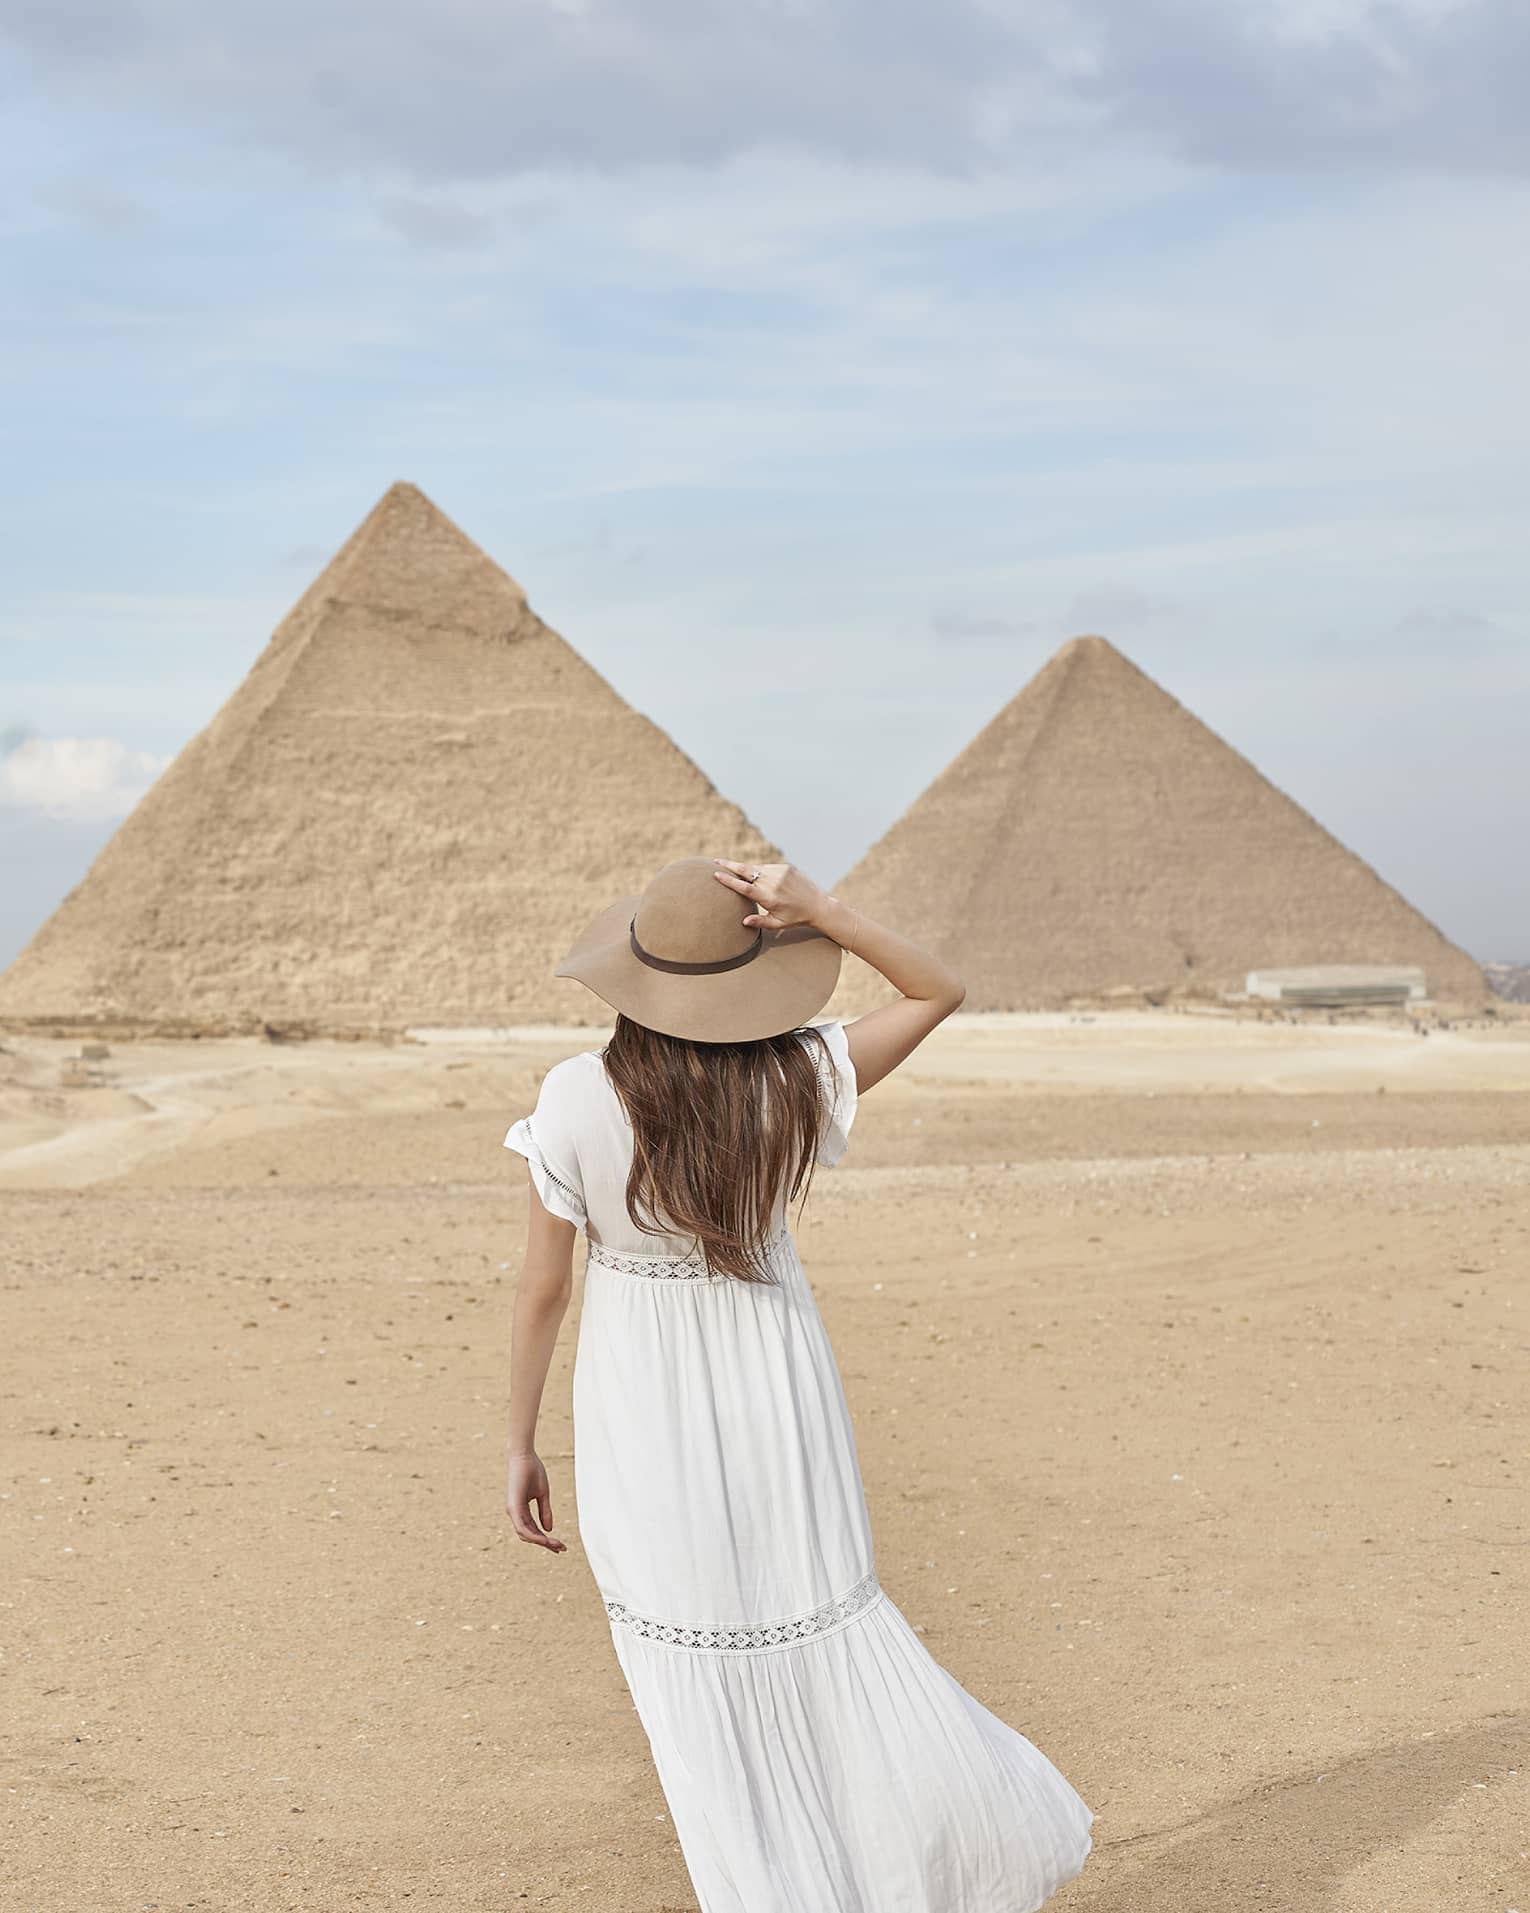 A guest wearing a linen dress observing the Great Pyramids